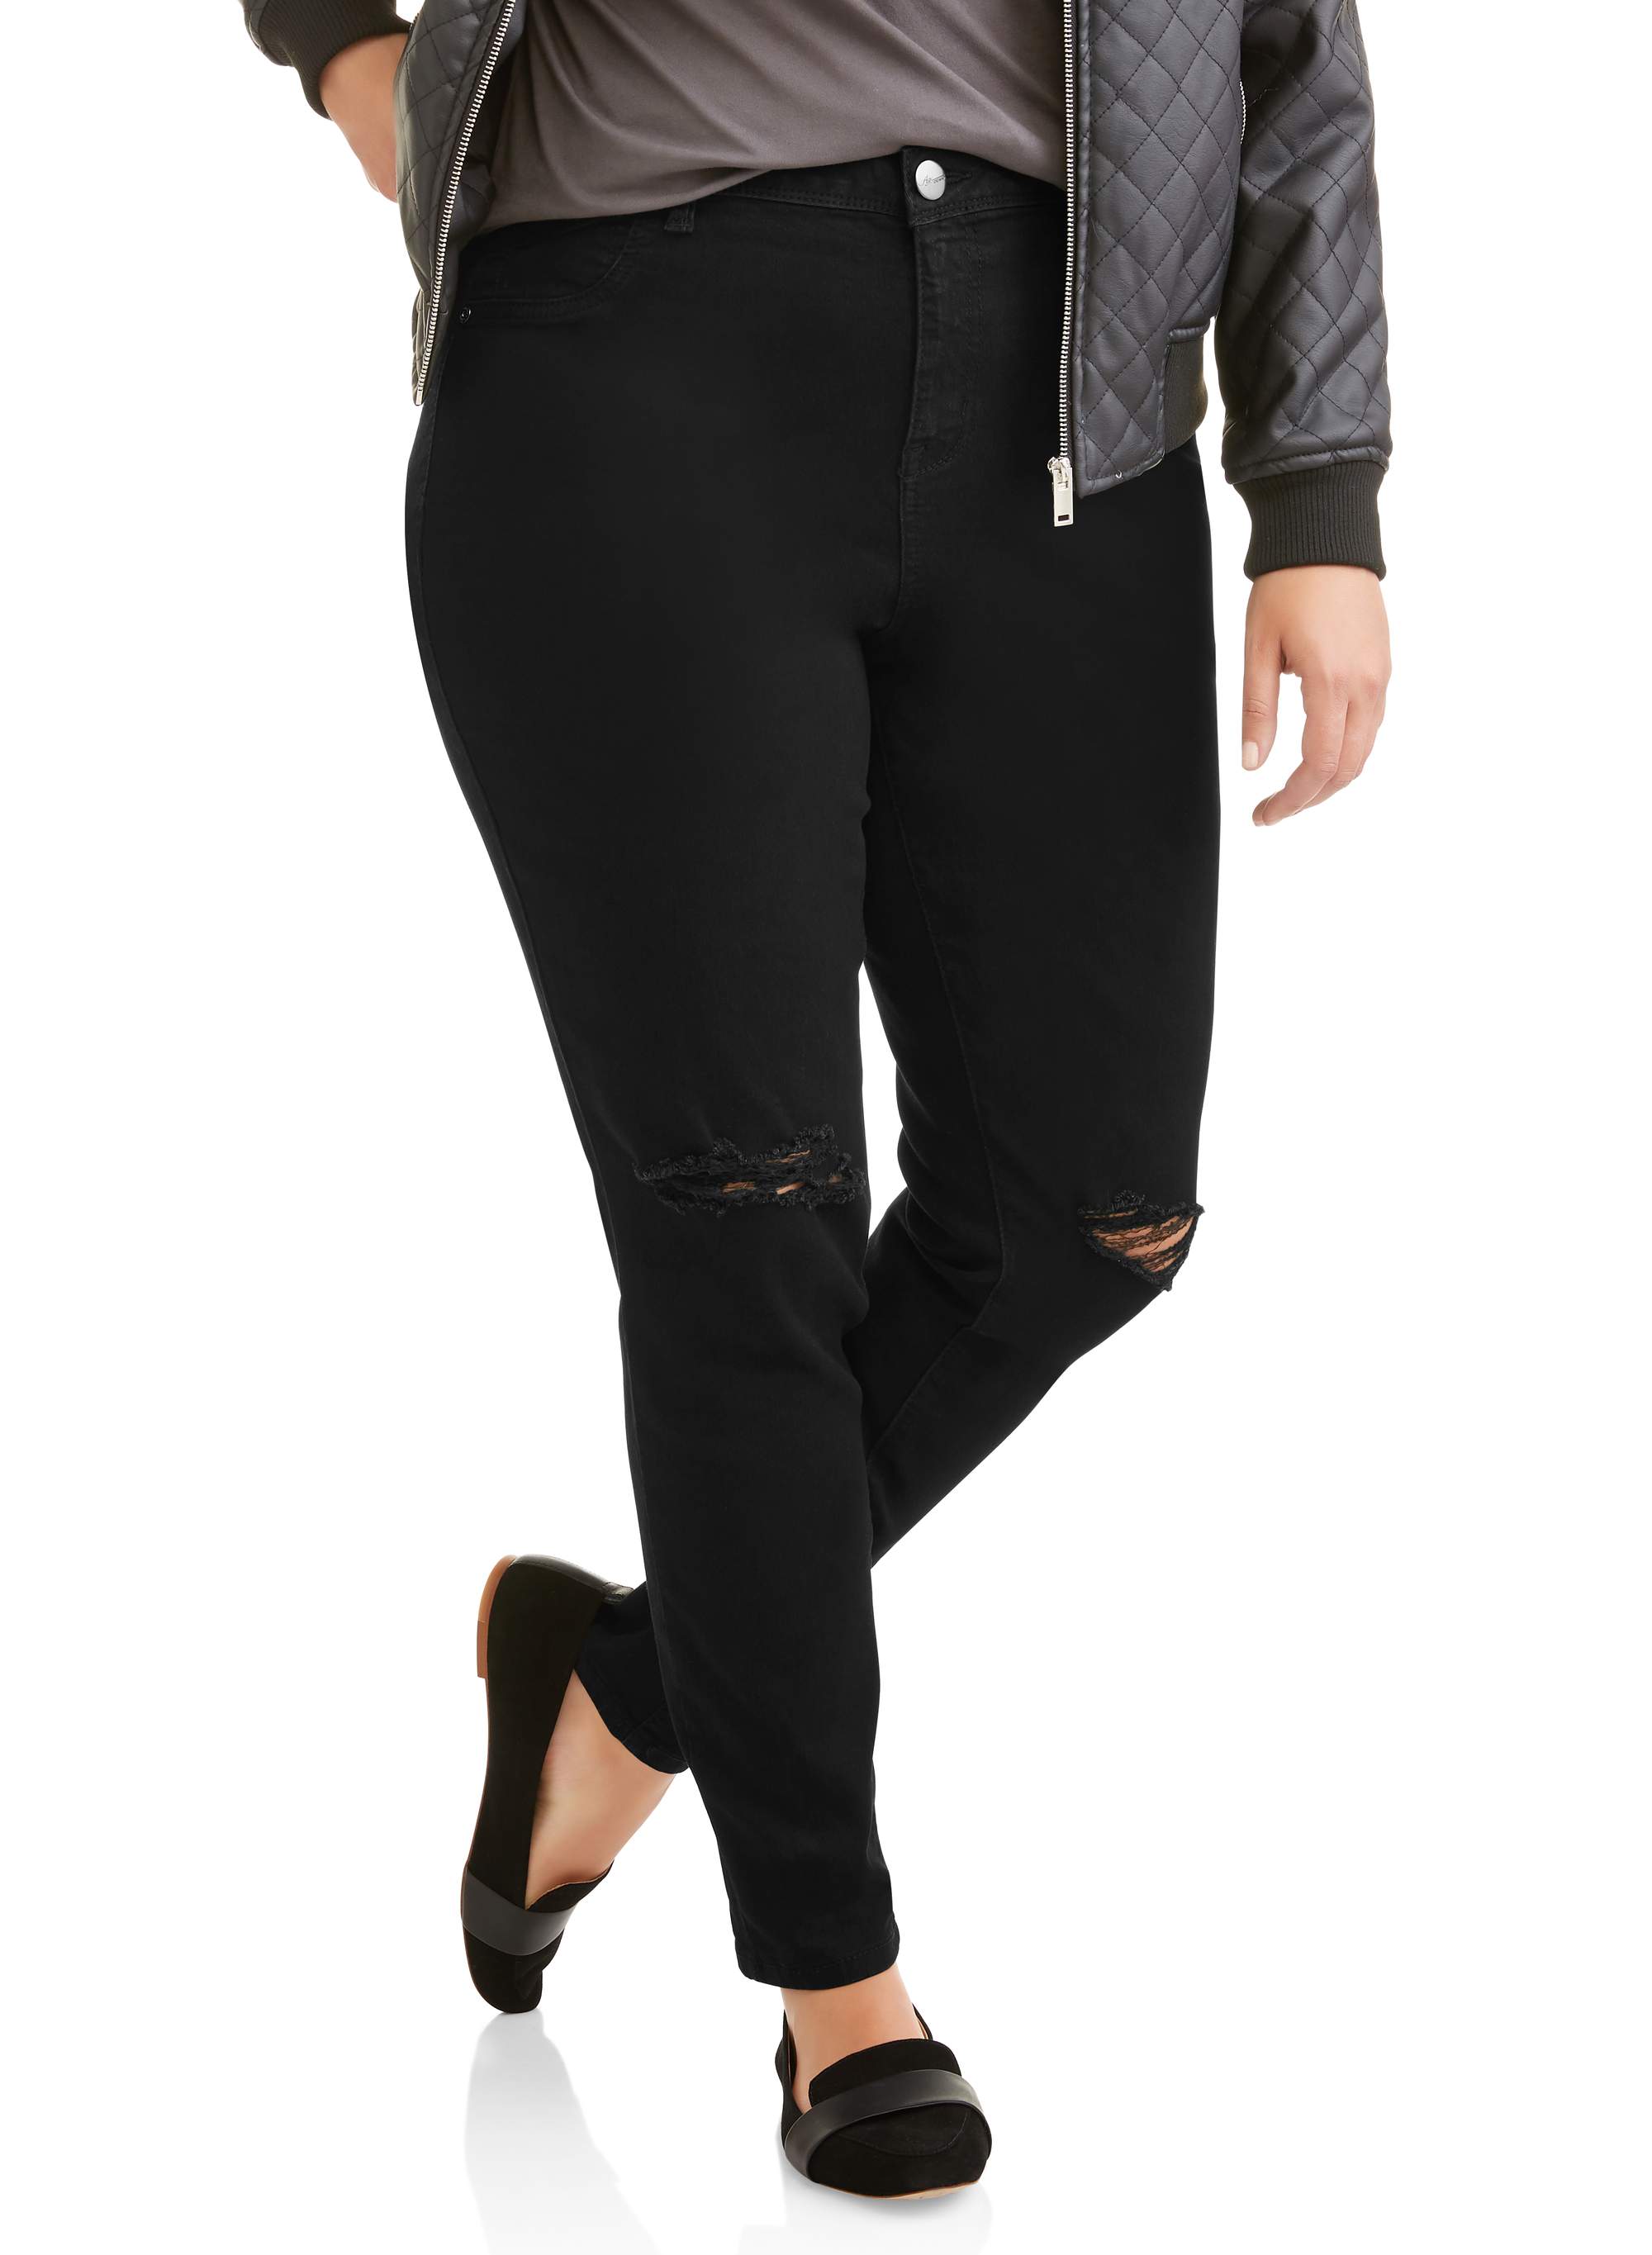 A3 Denim Women's Plus Sized Destructed Skinny Jeans, Size: 20, Black